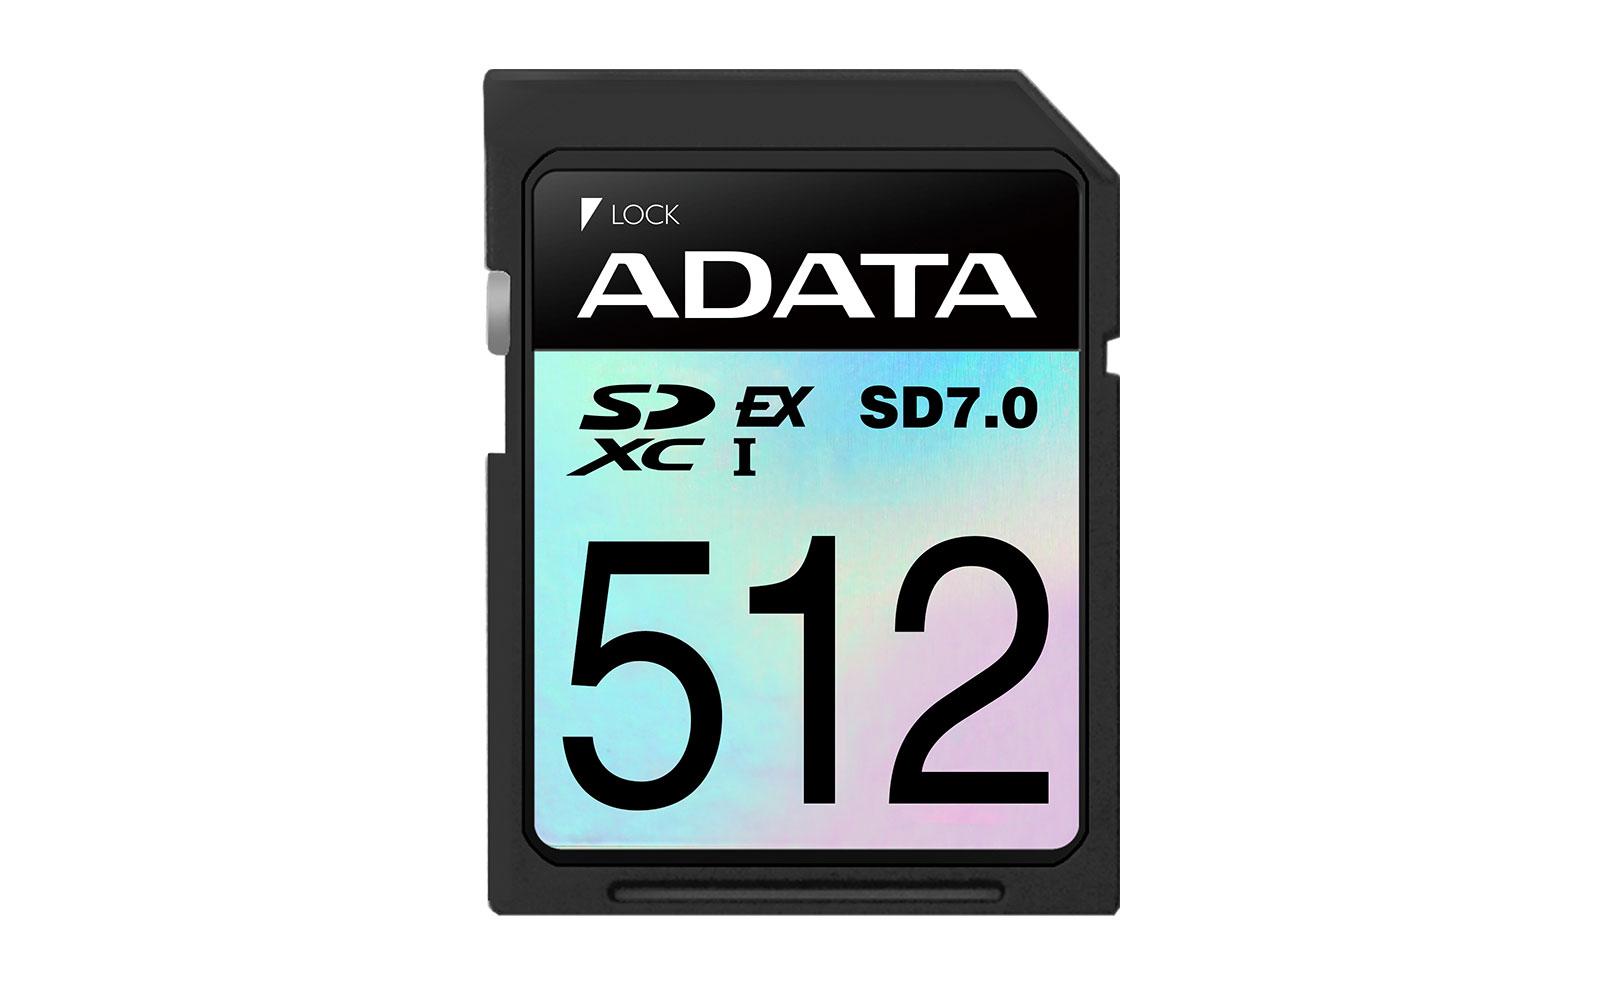 ADATA представляет карту памяти Premier Extreme SDXC SD 7.0 Express Card